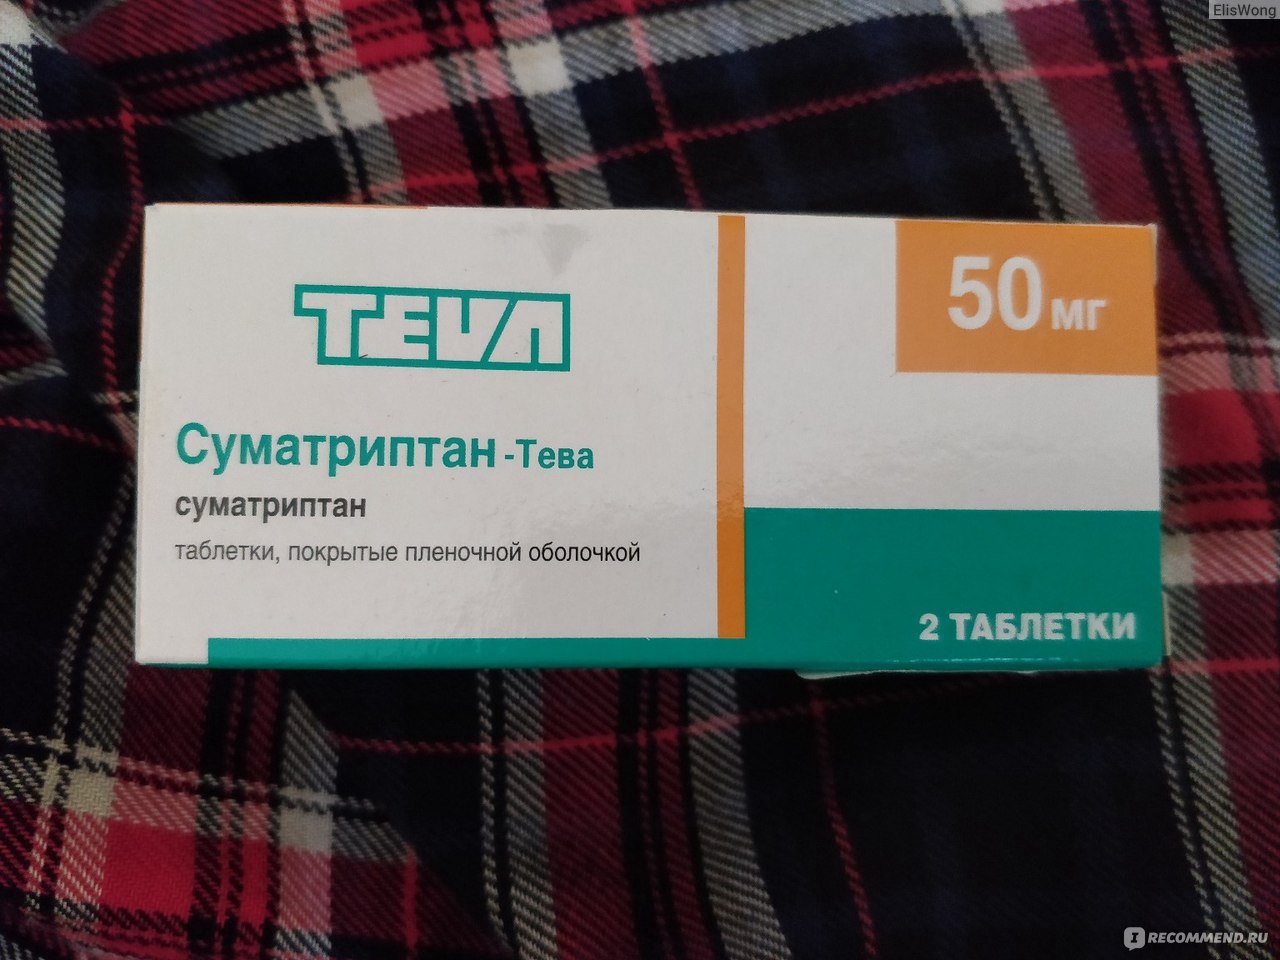 Противомигренозное средство TeVa Суматриптан-Тева 100 мг - «Вылезли .